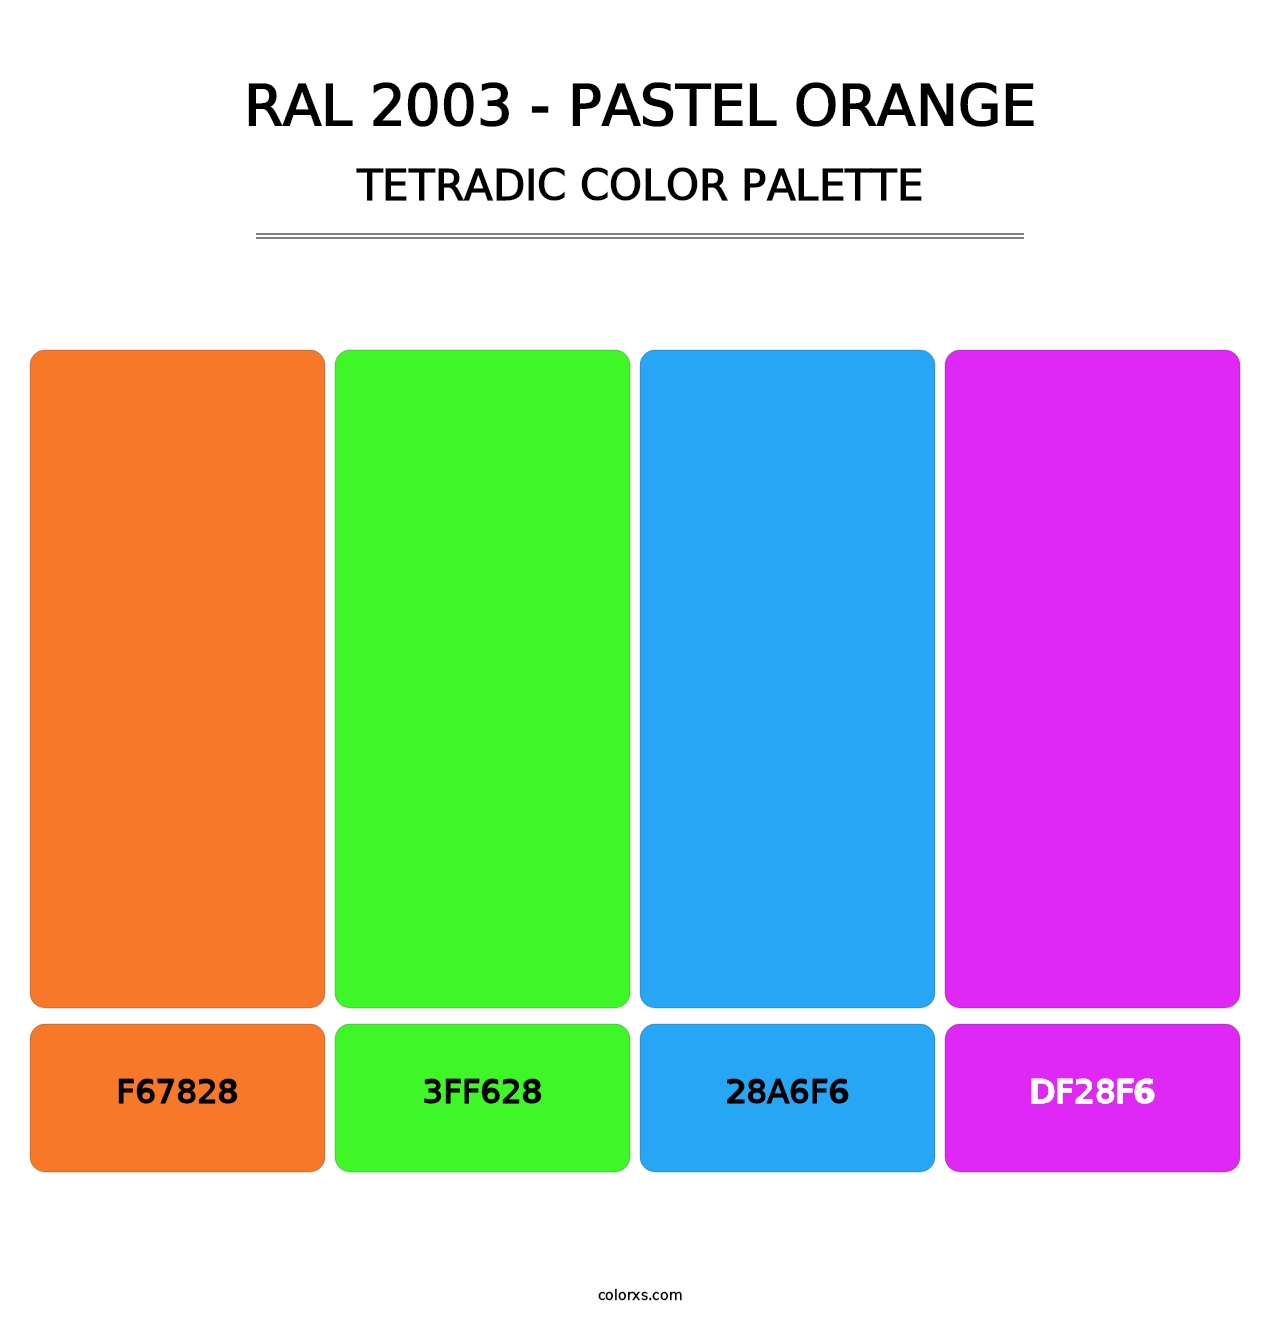 RAL 2003 - Pastel Orange - Tetradic Color Palette